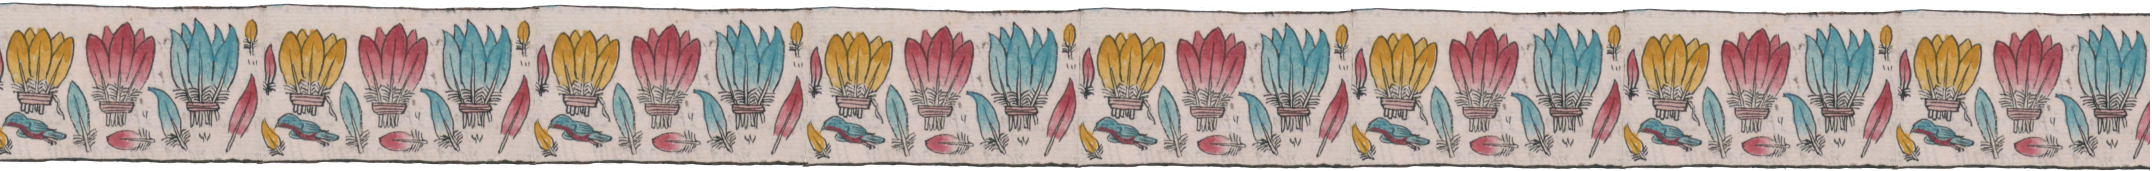 Florentine Codex feathers large banner 1